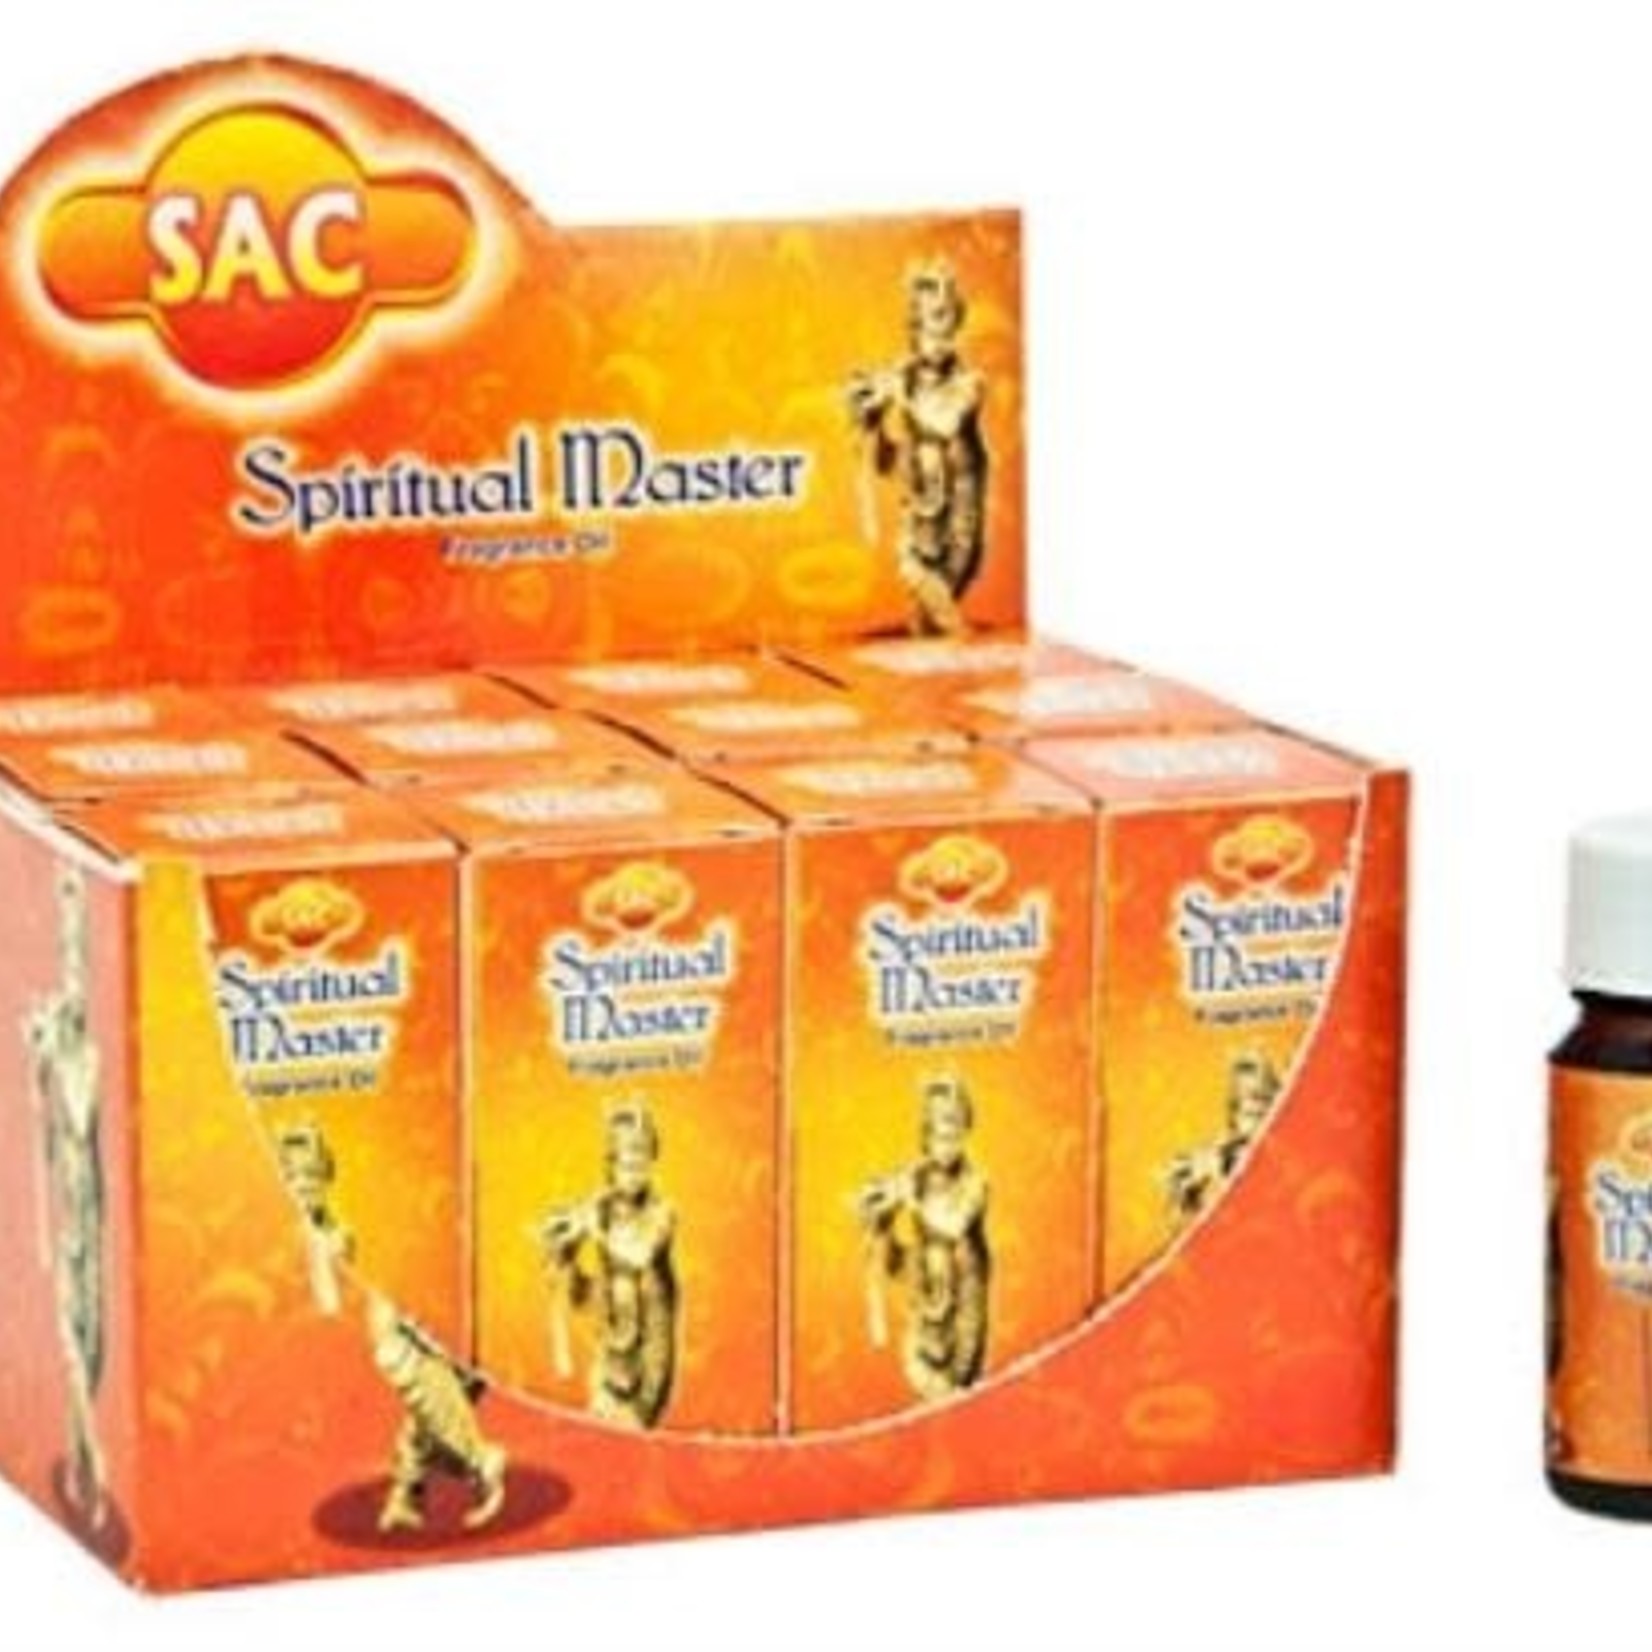 SAC Spiritual Master Fragrance oil - SAC